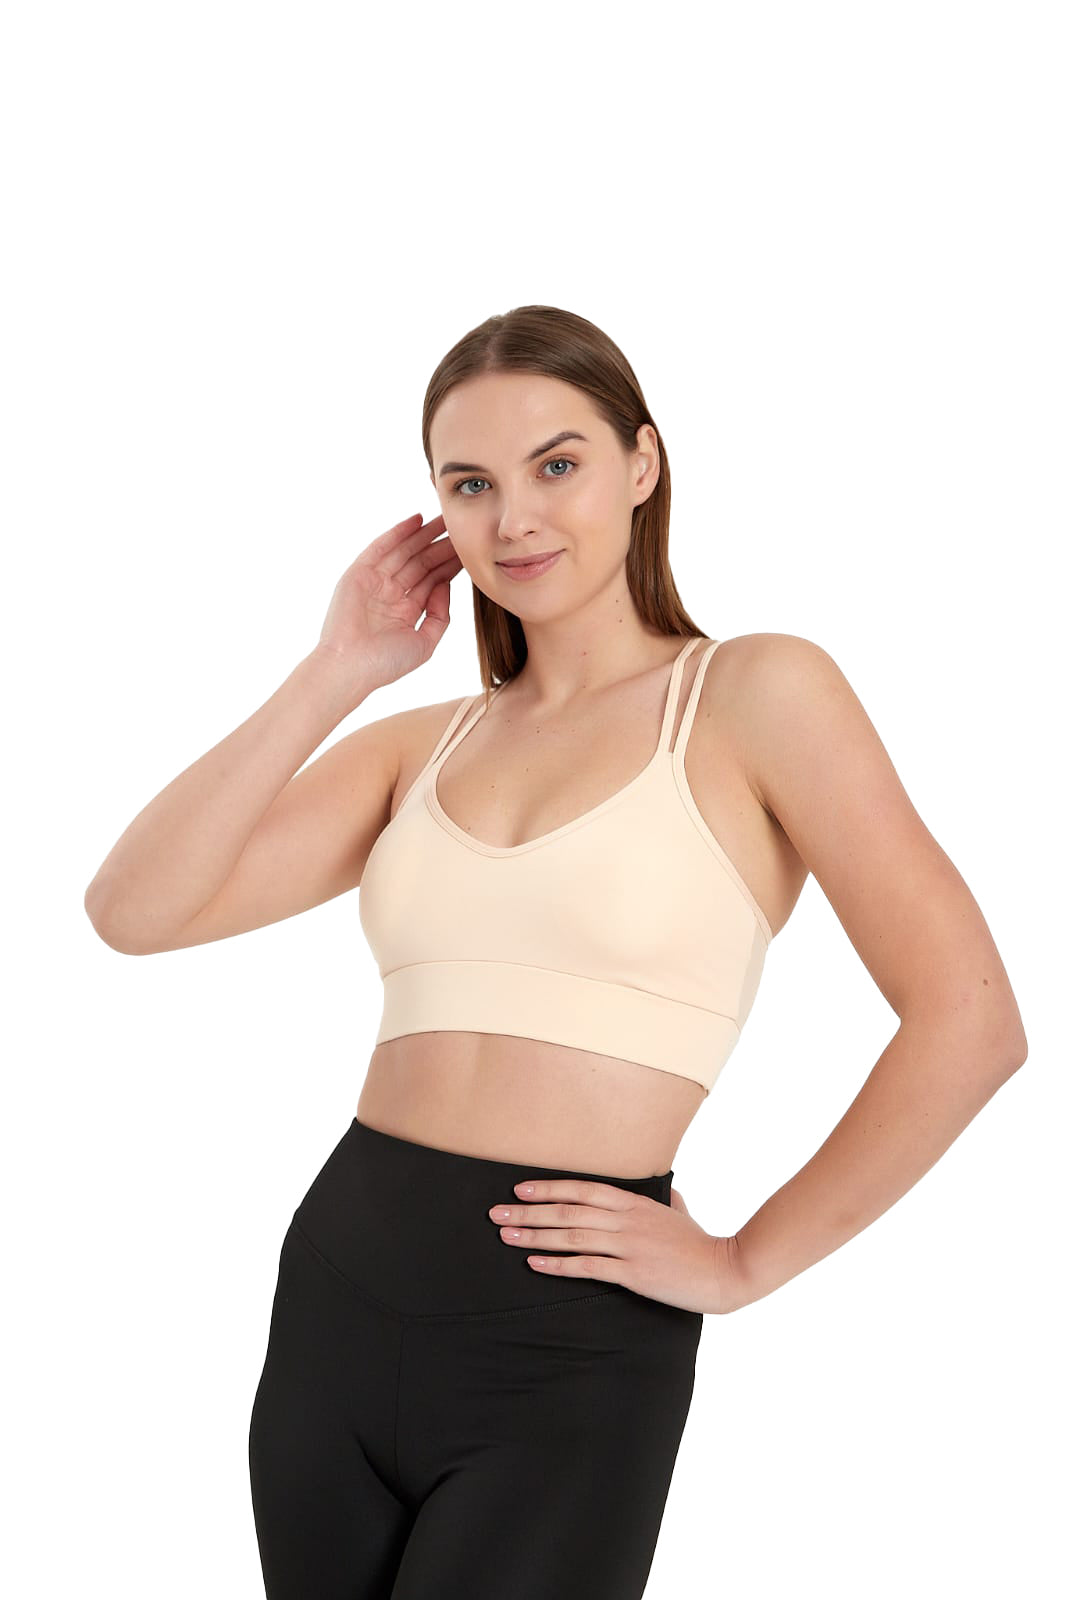 Padded Ladies Workout Wear, Double Strap Plunge Neck Top - NEW ARRIVALS! - Wear Sierra